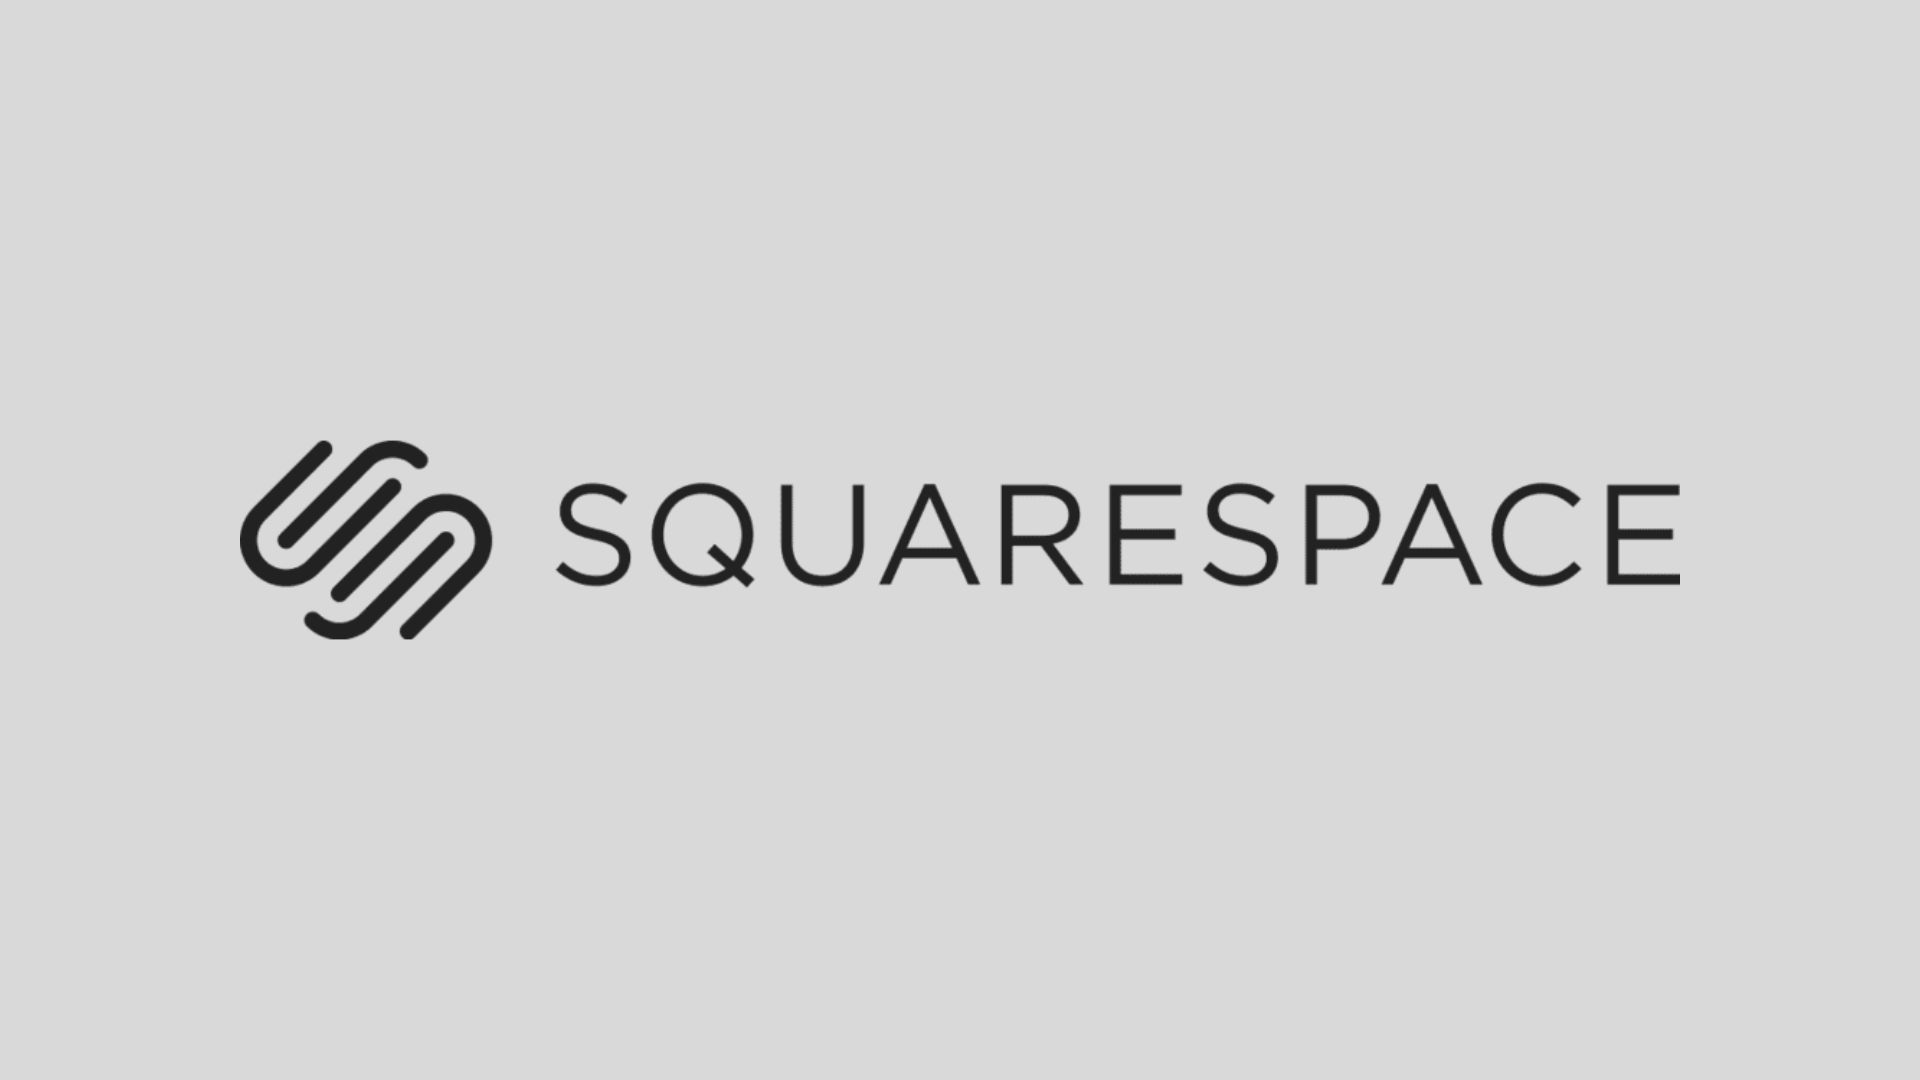 Squarespace logo on grey background